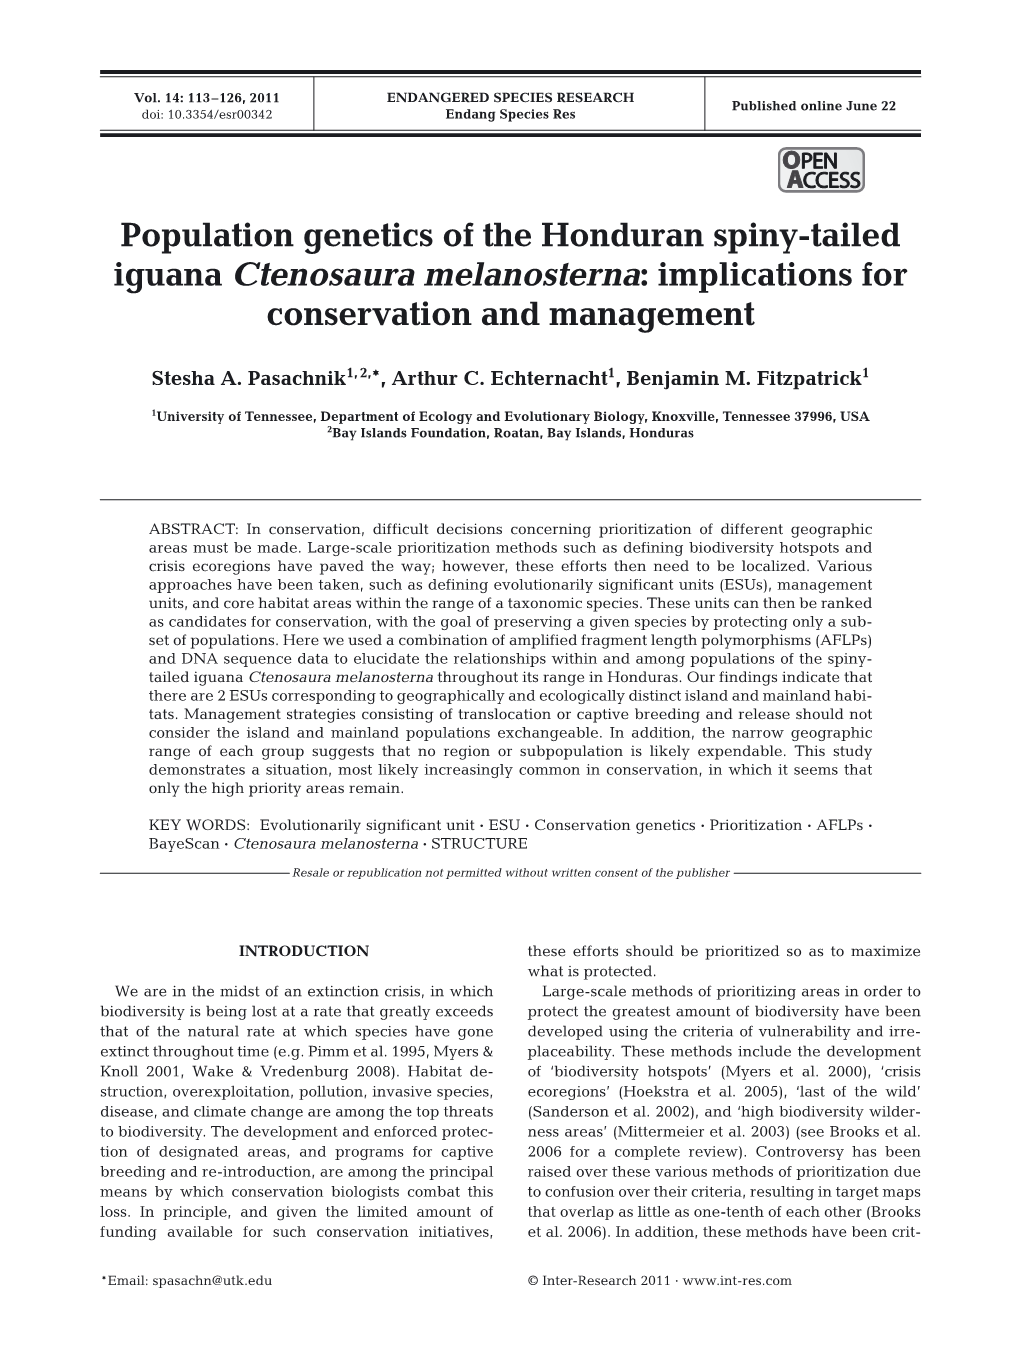 Population Genetics of the Honduran Spiny-Tailed Iguana Ctenosaura Melanosterna: Implications for Conservation and Management